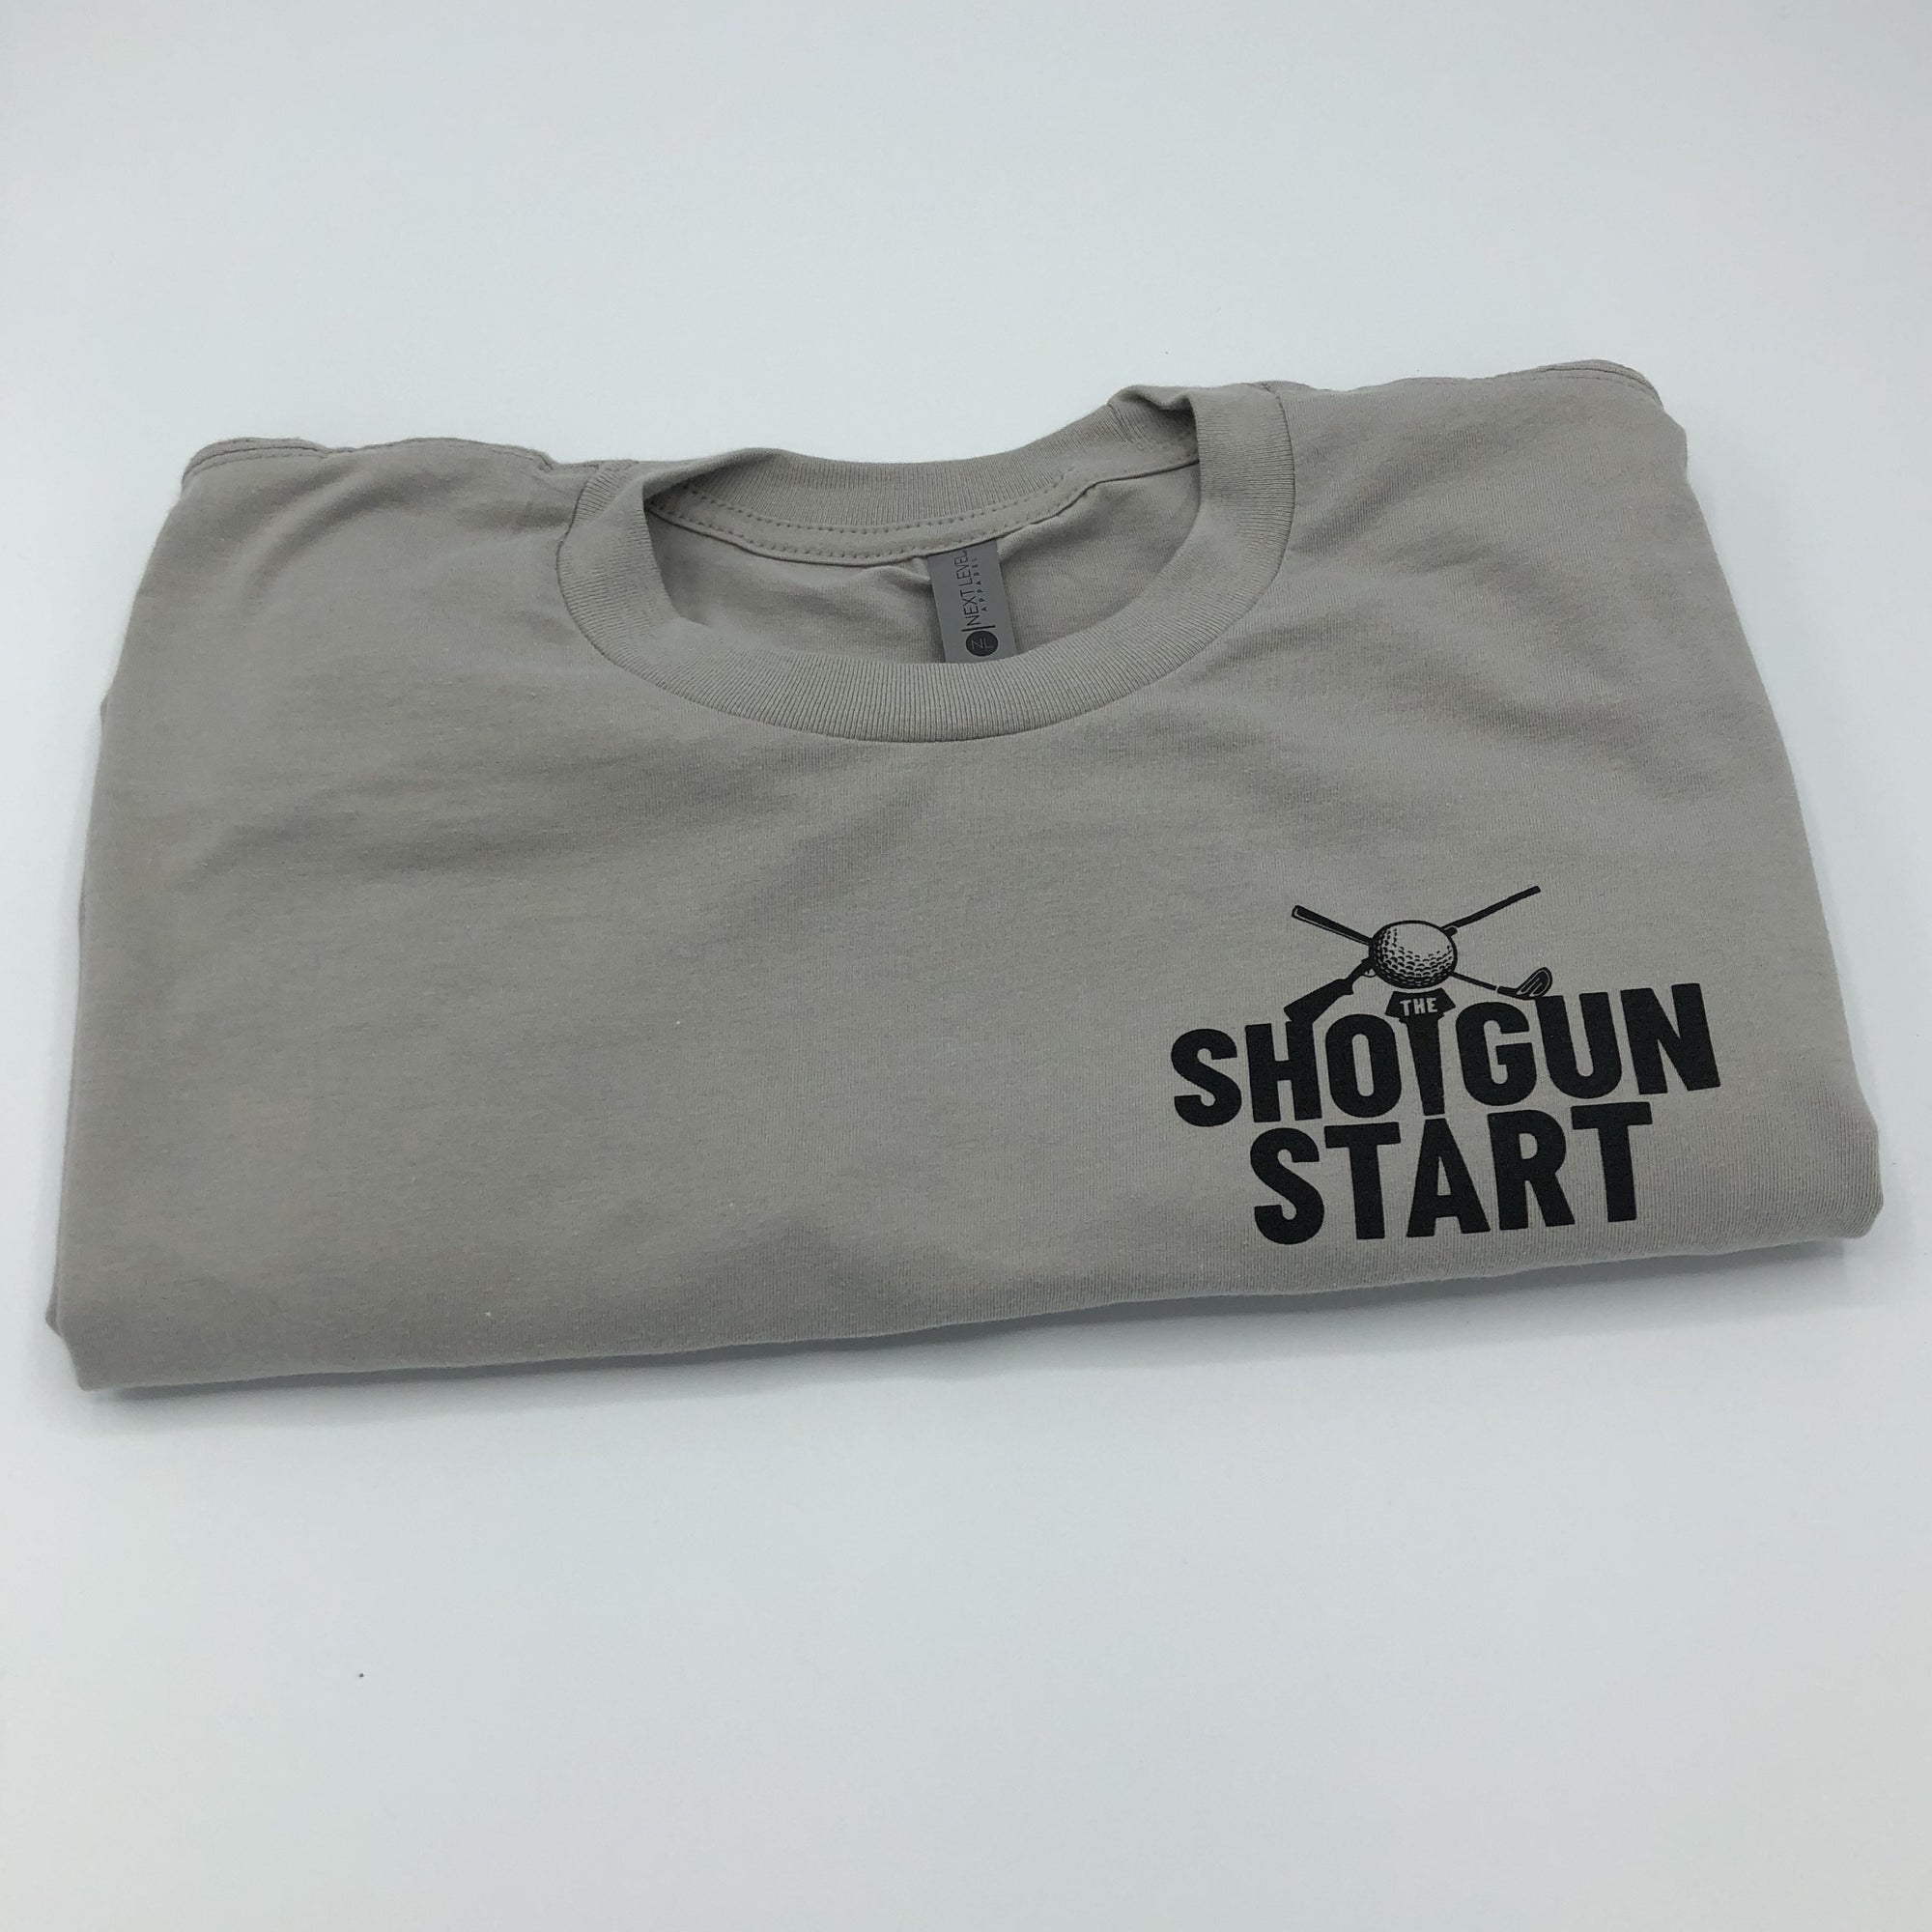 The Shotgun Start "The Traveler" T-Shirt